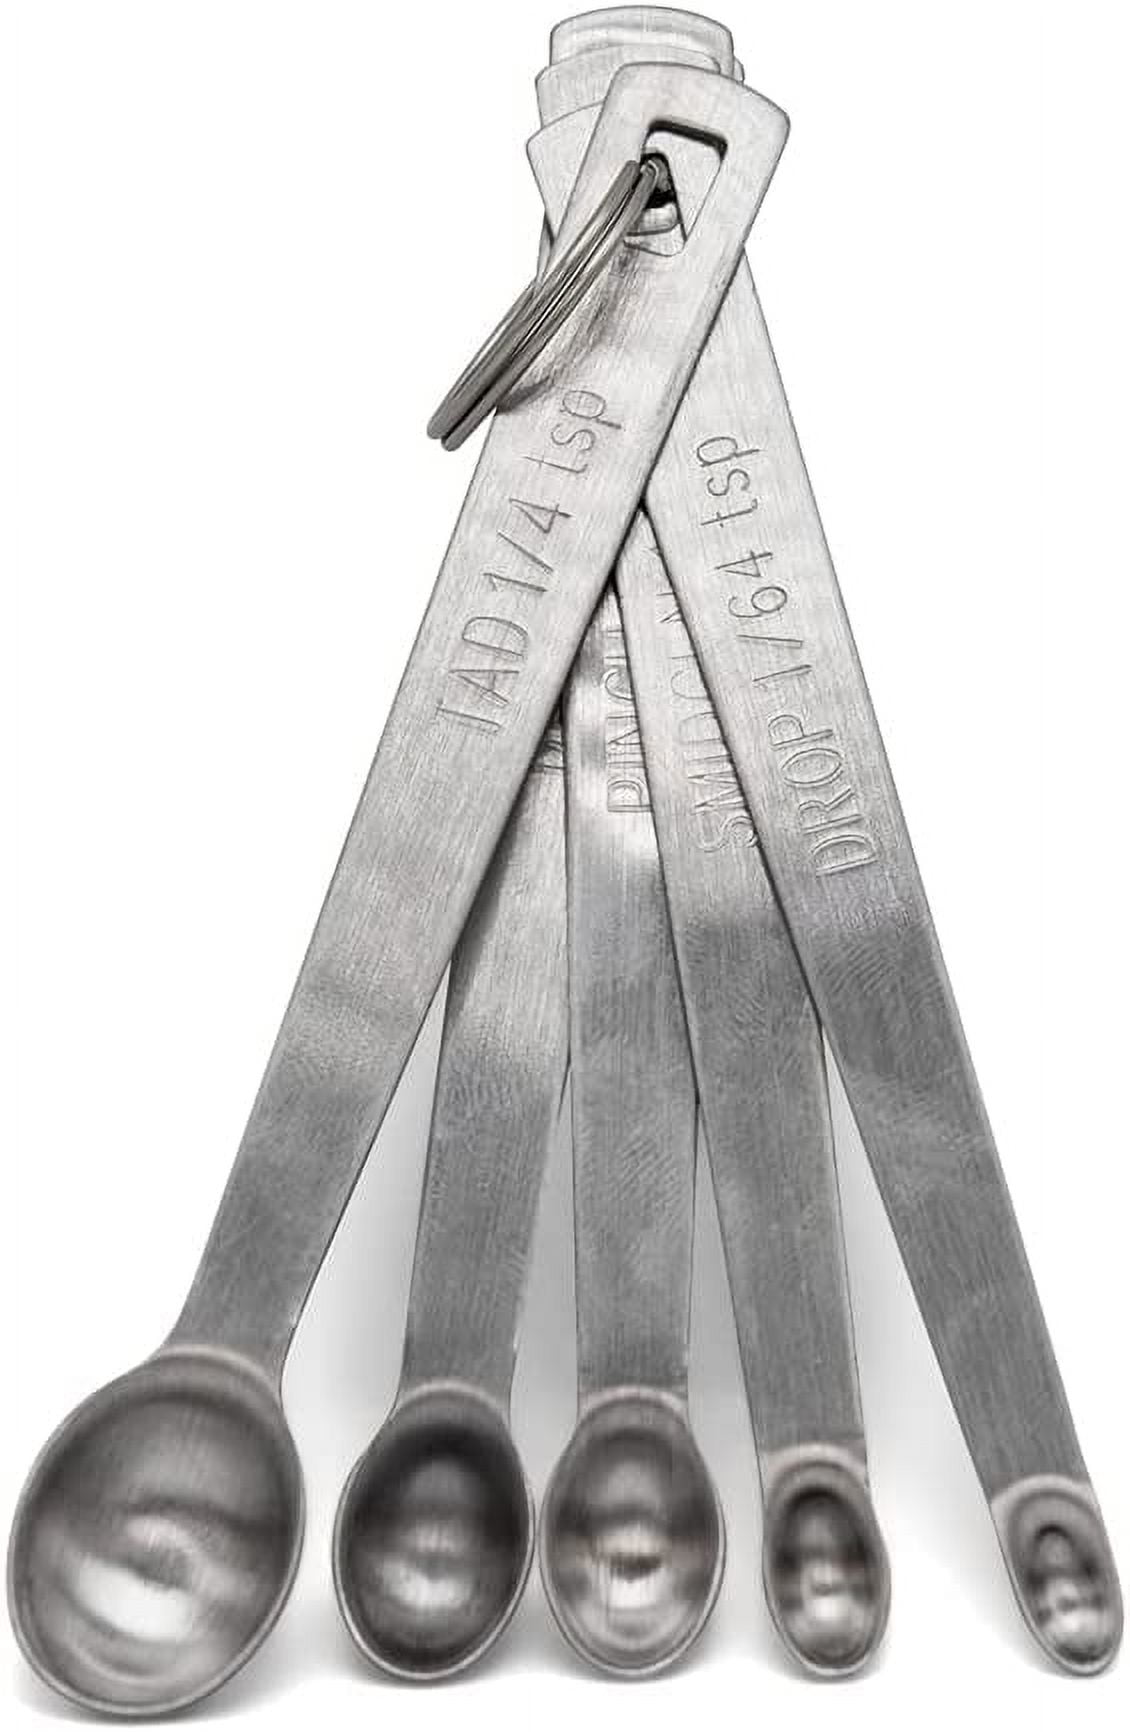 Tad Dash Pinch Smidgen Drop Stainless Steel 5 Pieces Mini Teaspoon Small  Measuring Spoons - Buy Mini Measuring Spoon,Stainless Steel Mini Measuring